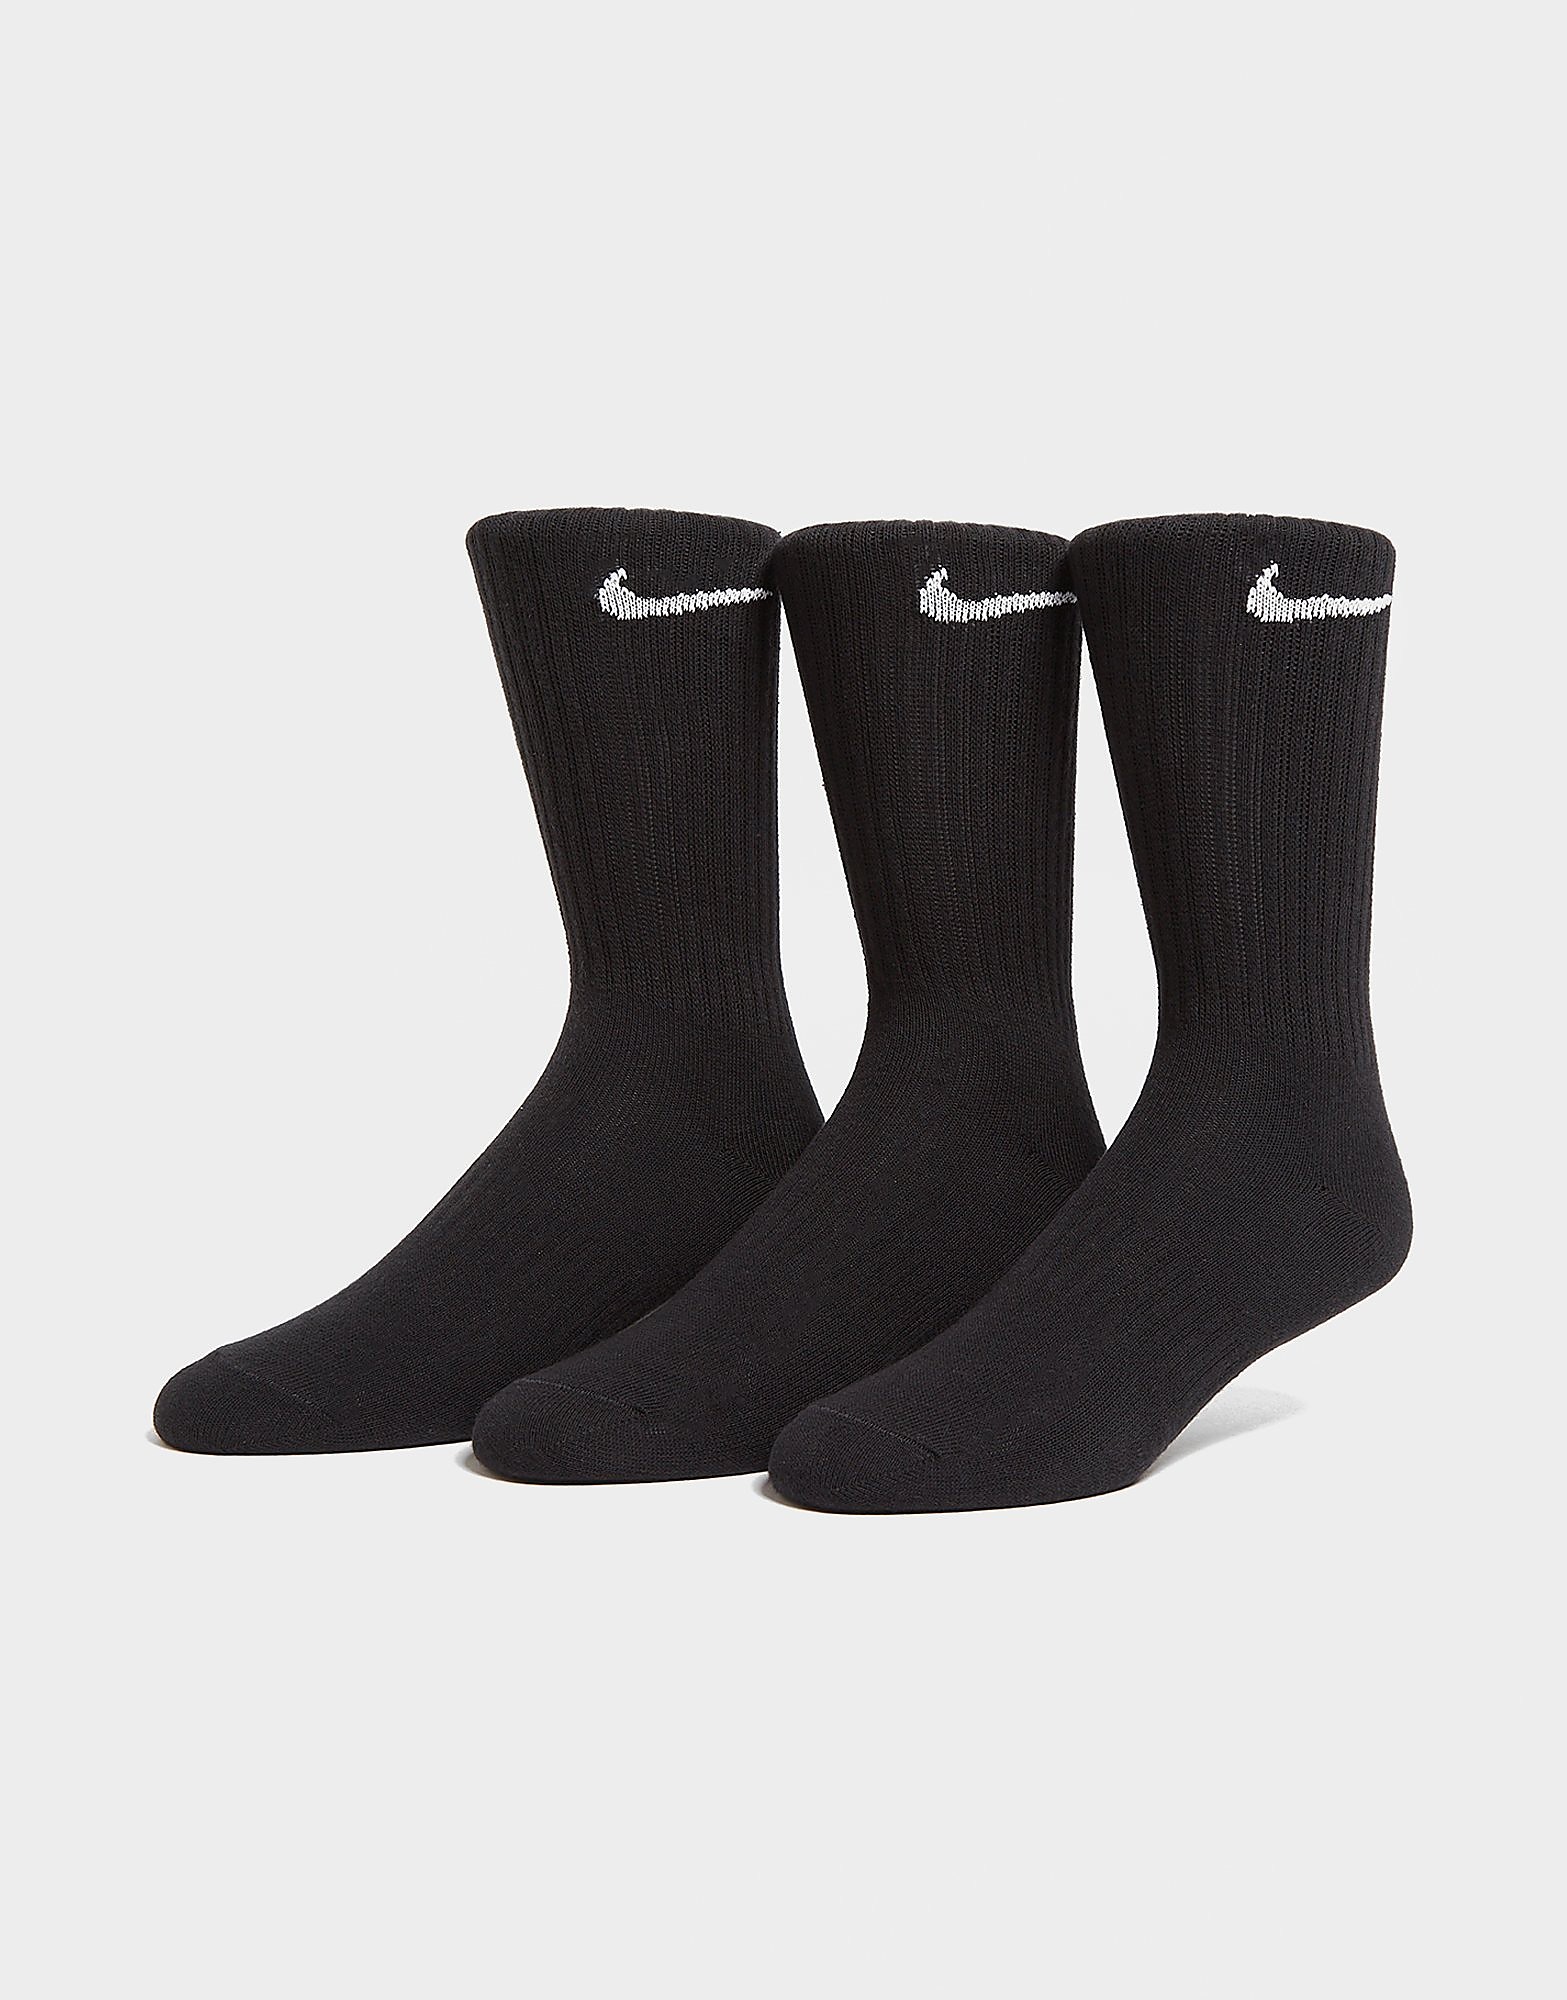 Nike kevyet sukat 3 kpl - mens, musta, nike